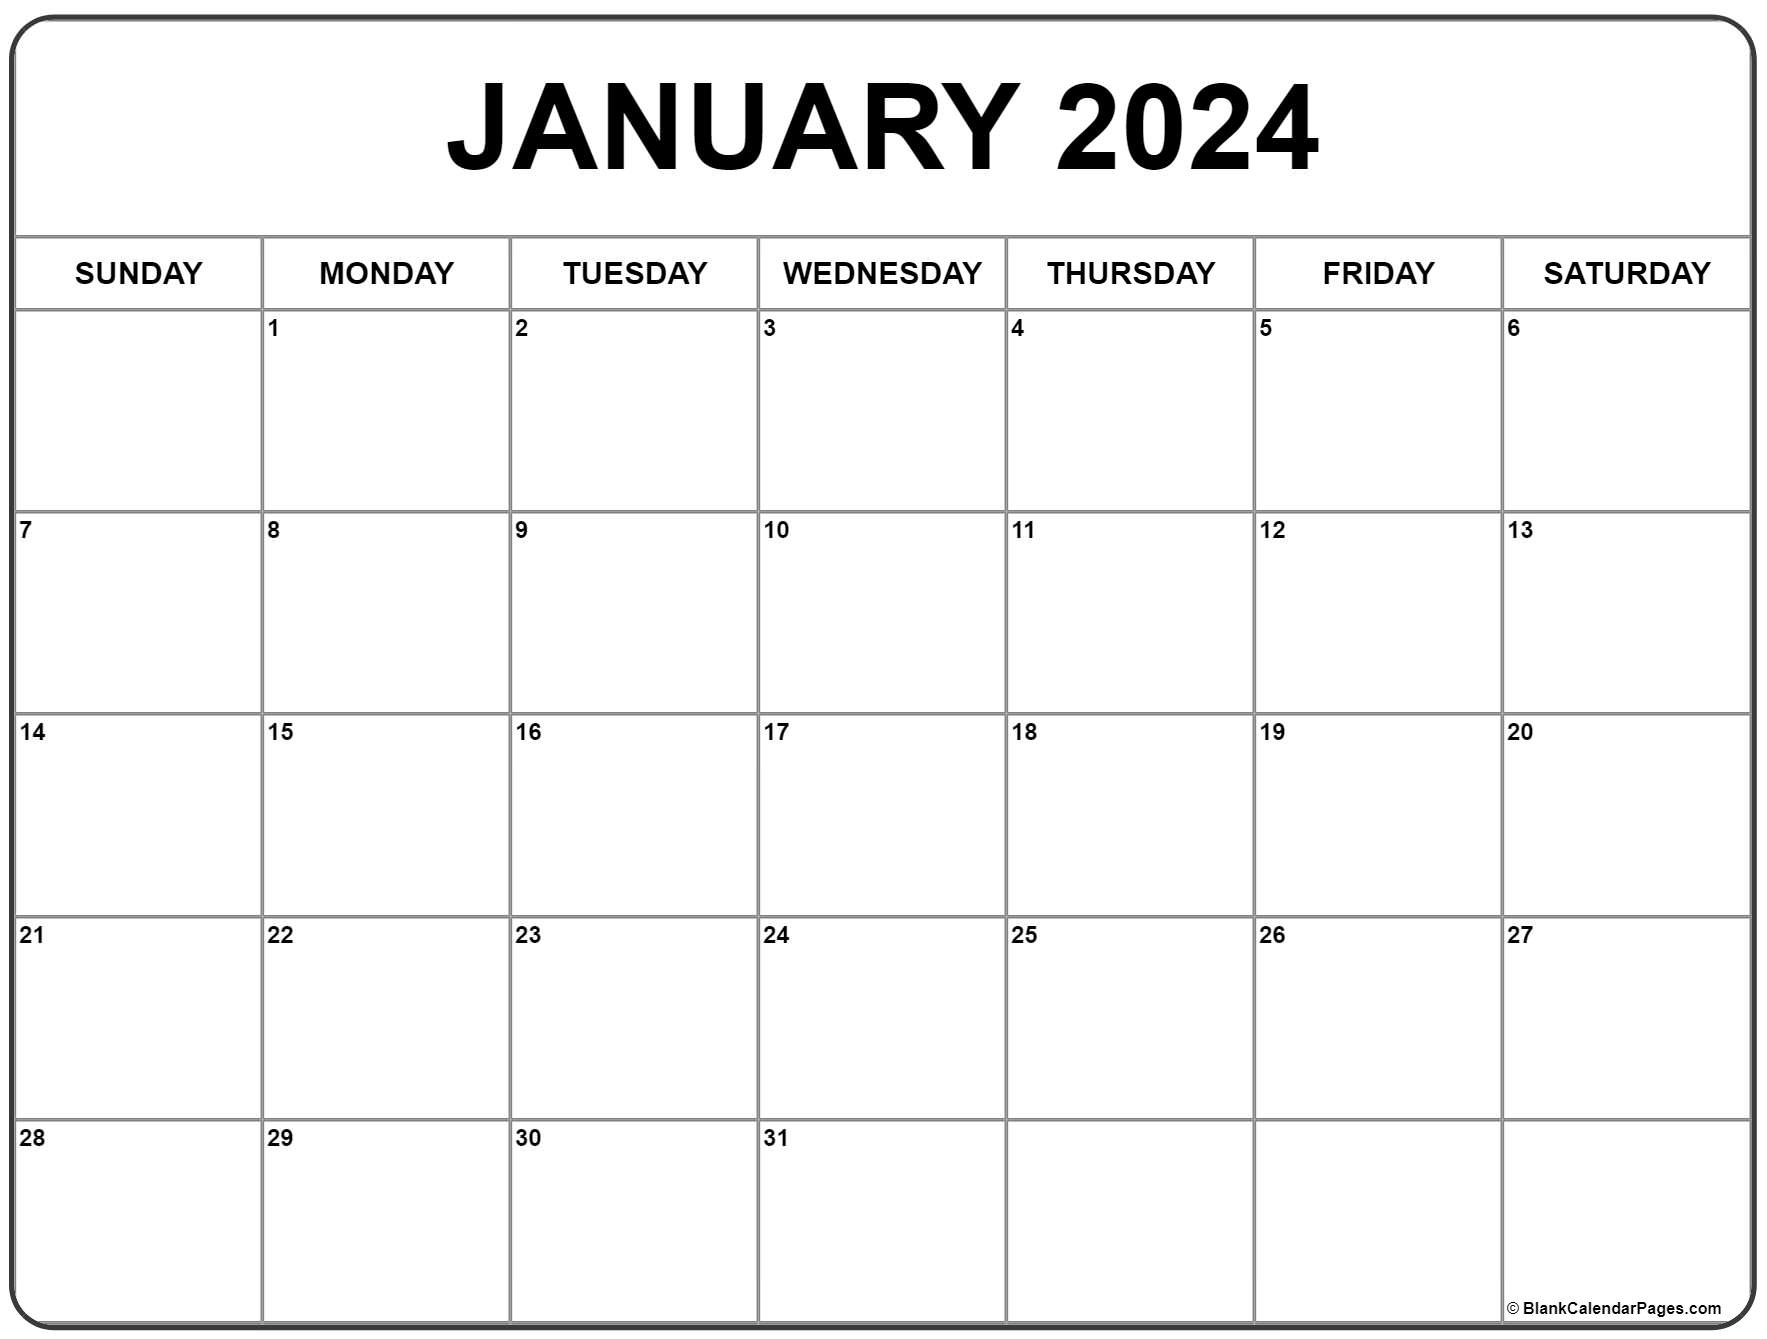 January 2024 Calendar | Free Printable Calendar for Blank Calendar Printable January 2024